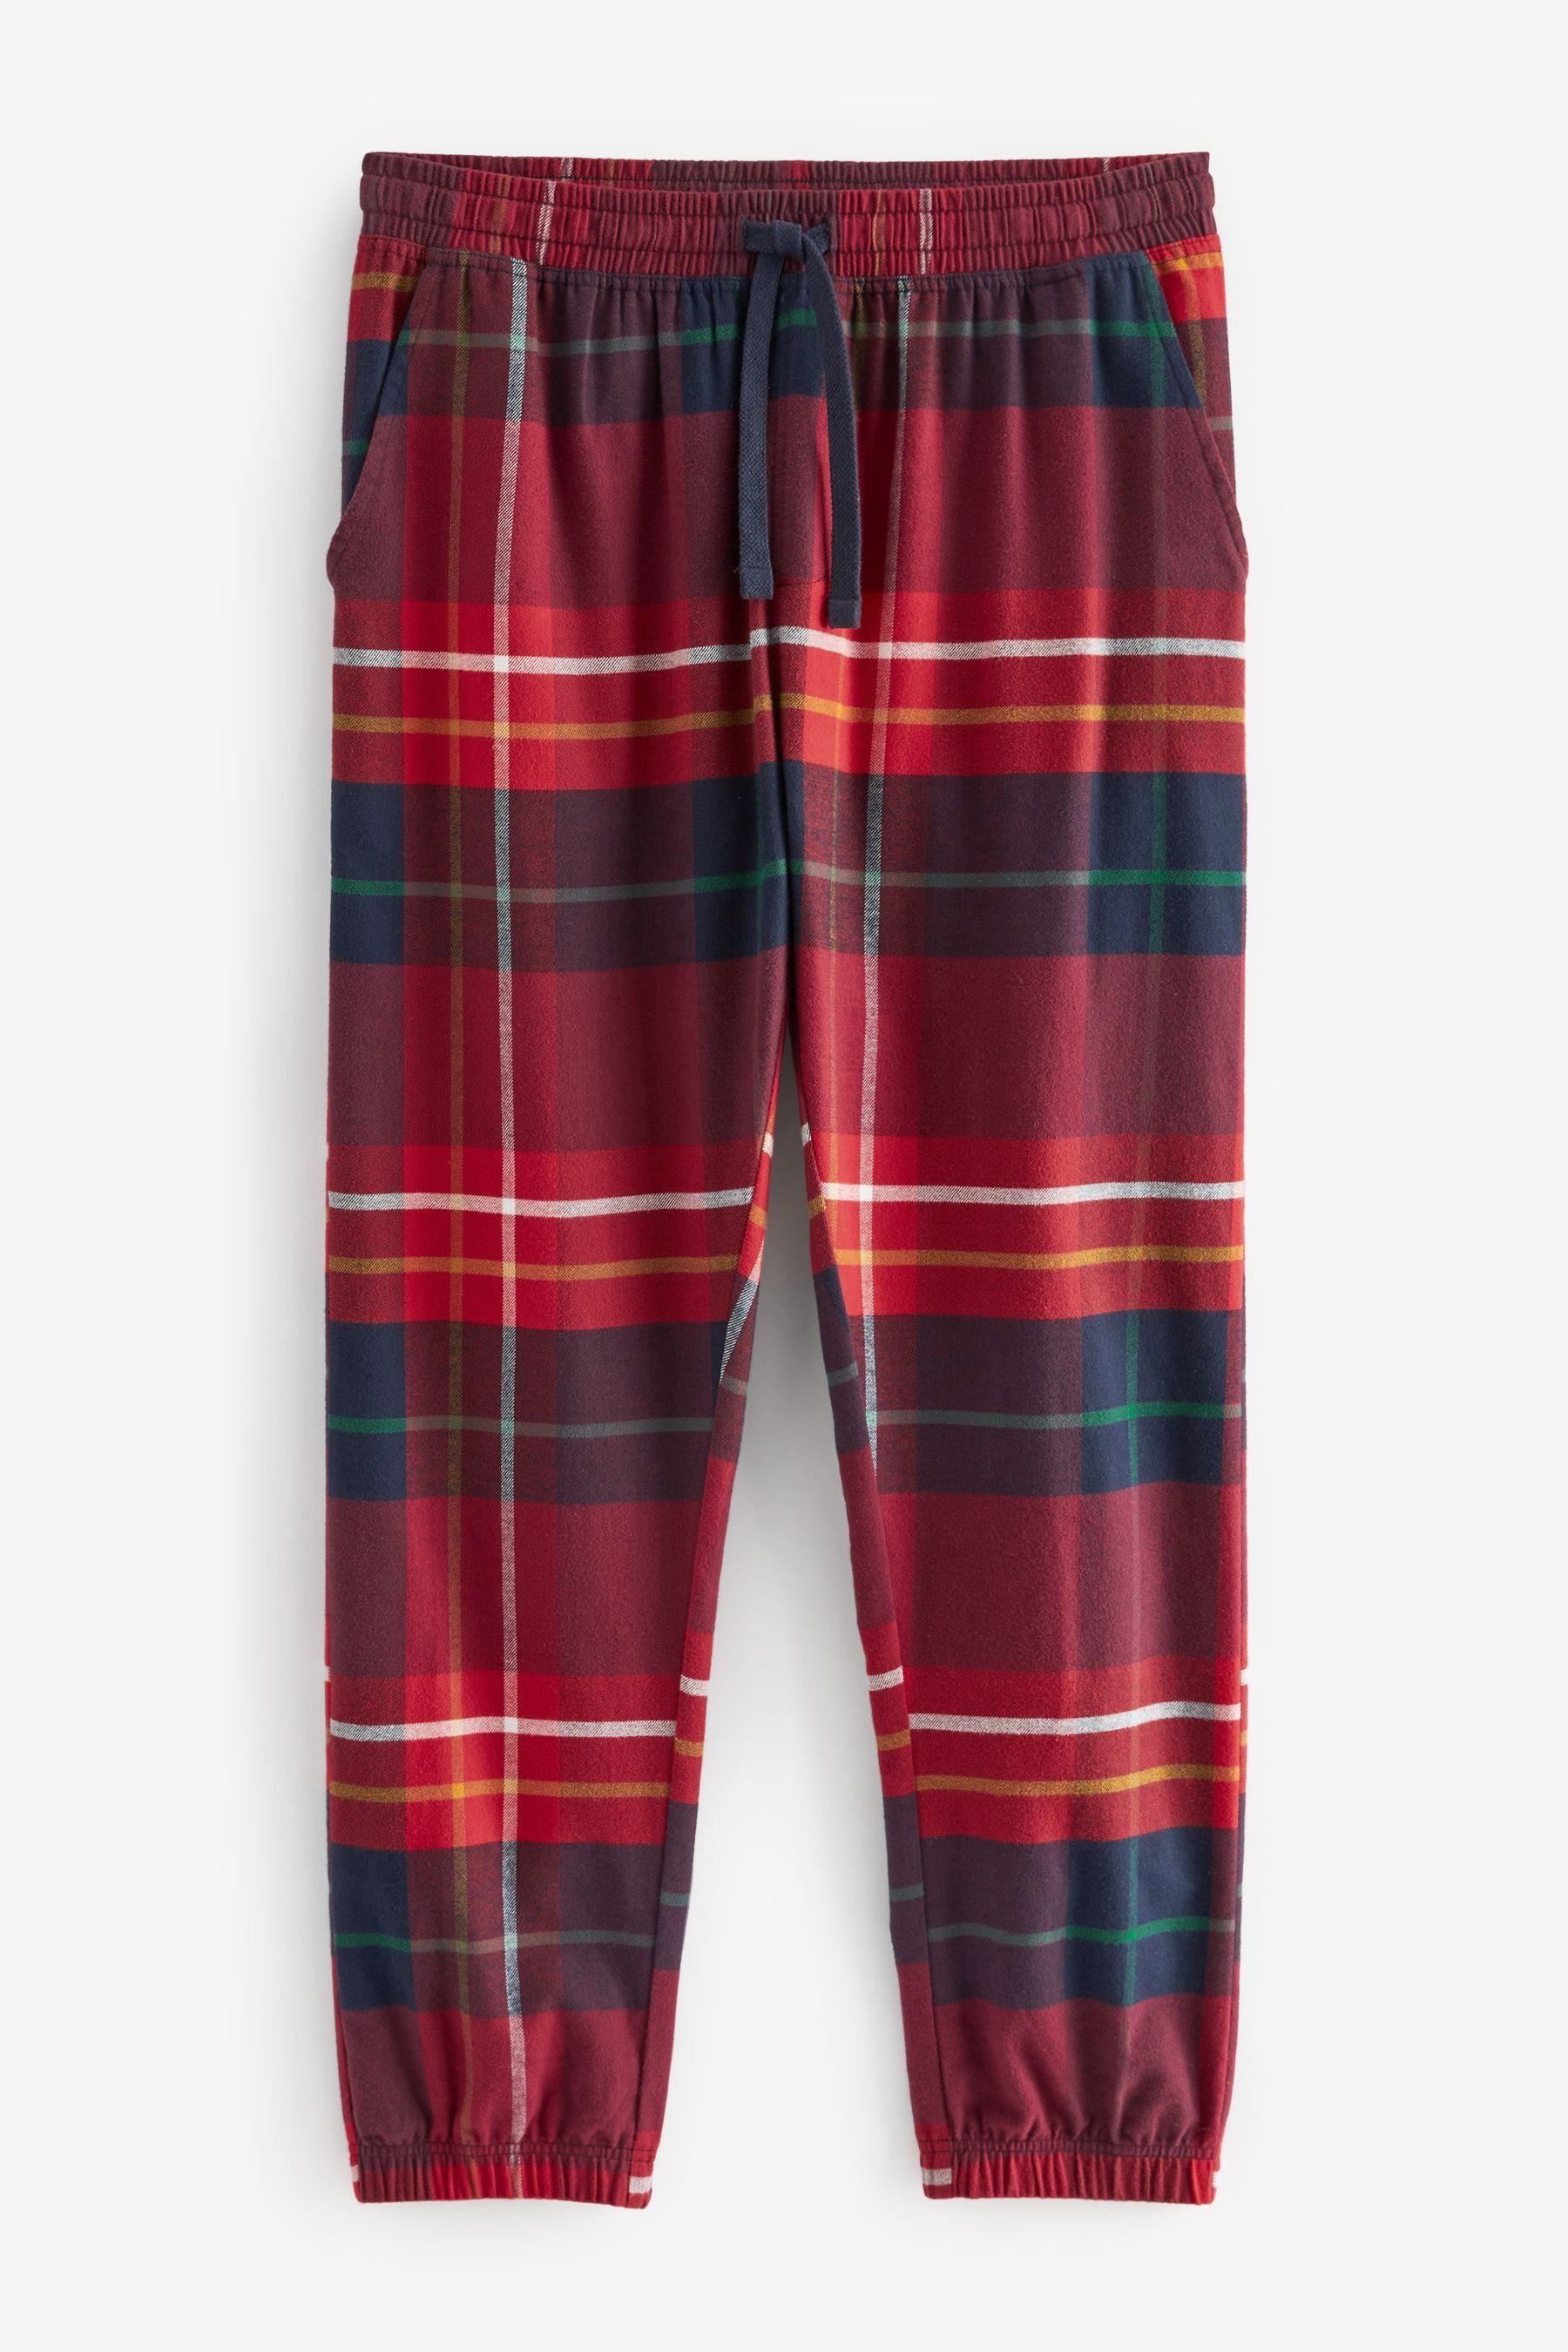 tlg) Damen-Flanellpyjama Pyjama (Familienkollektion) Next (2